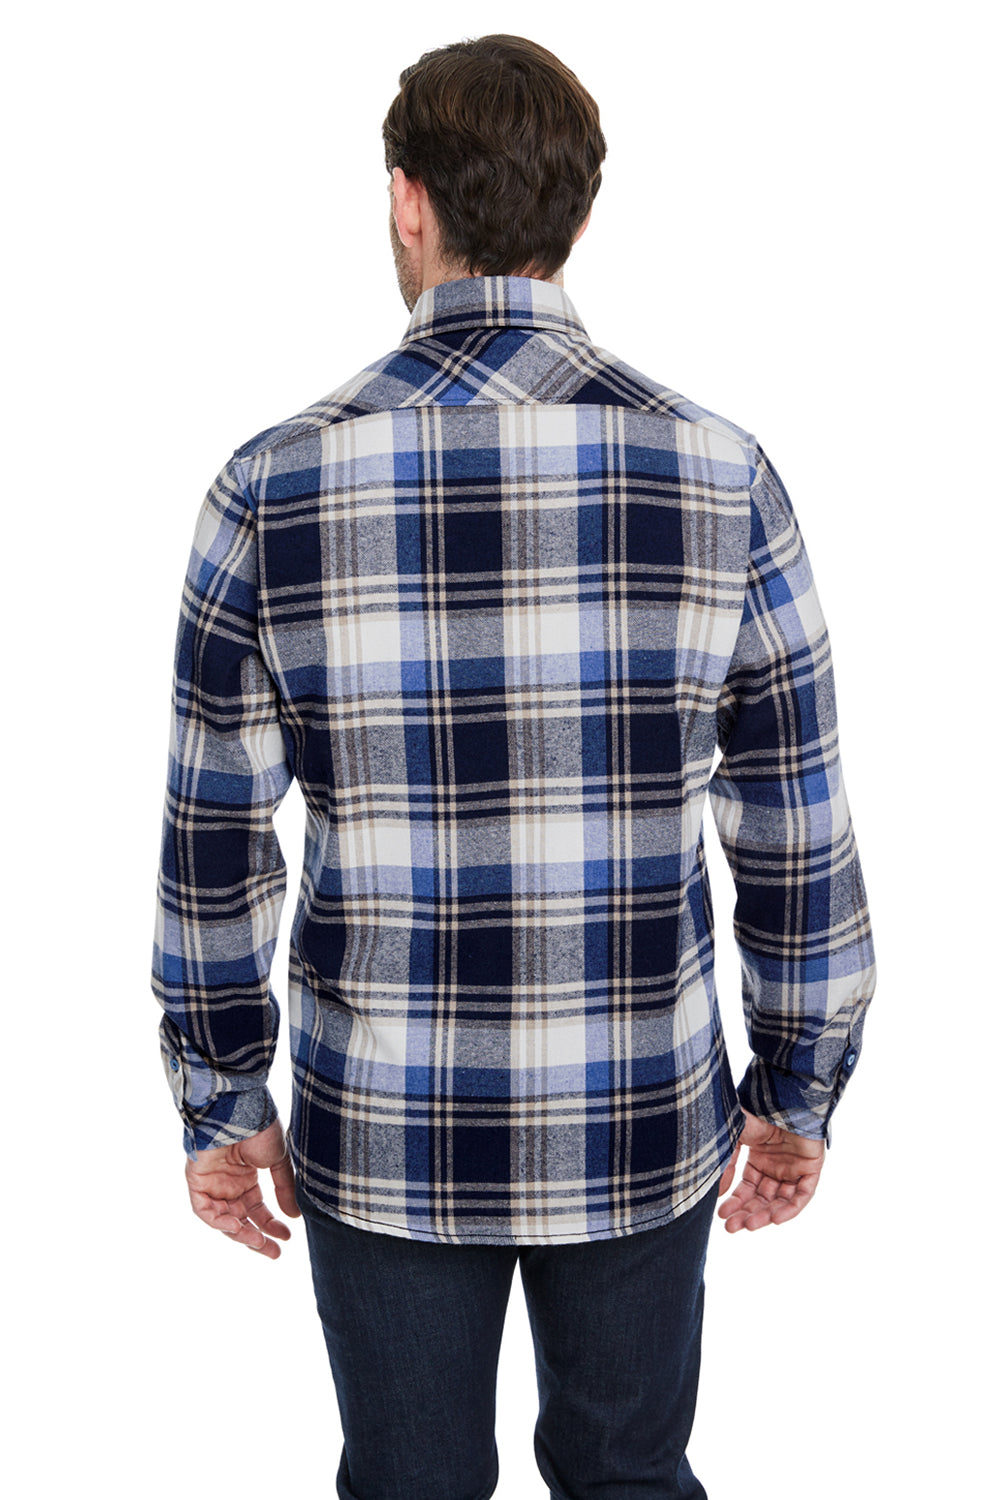 Burnside B8212 Mens Flannel Long Sleeve Button Down Shirt w/ Pocket Blue/Ecru Model Back